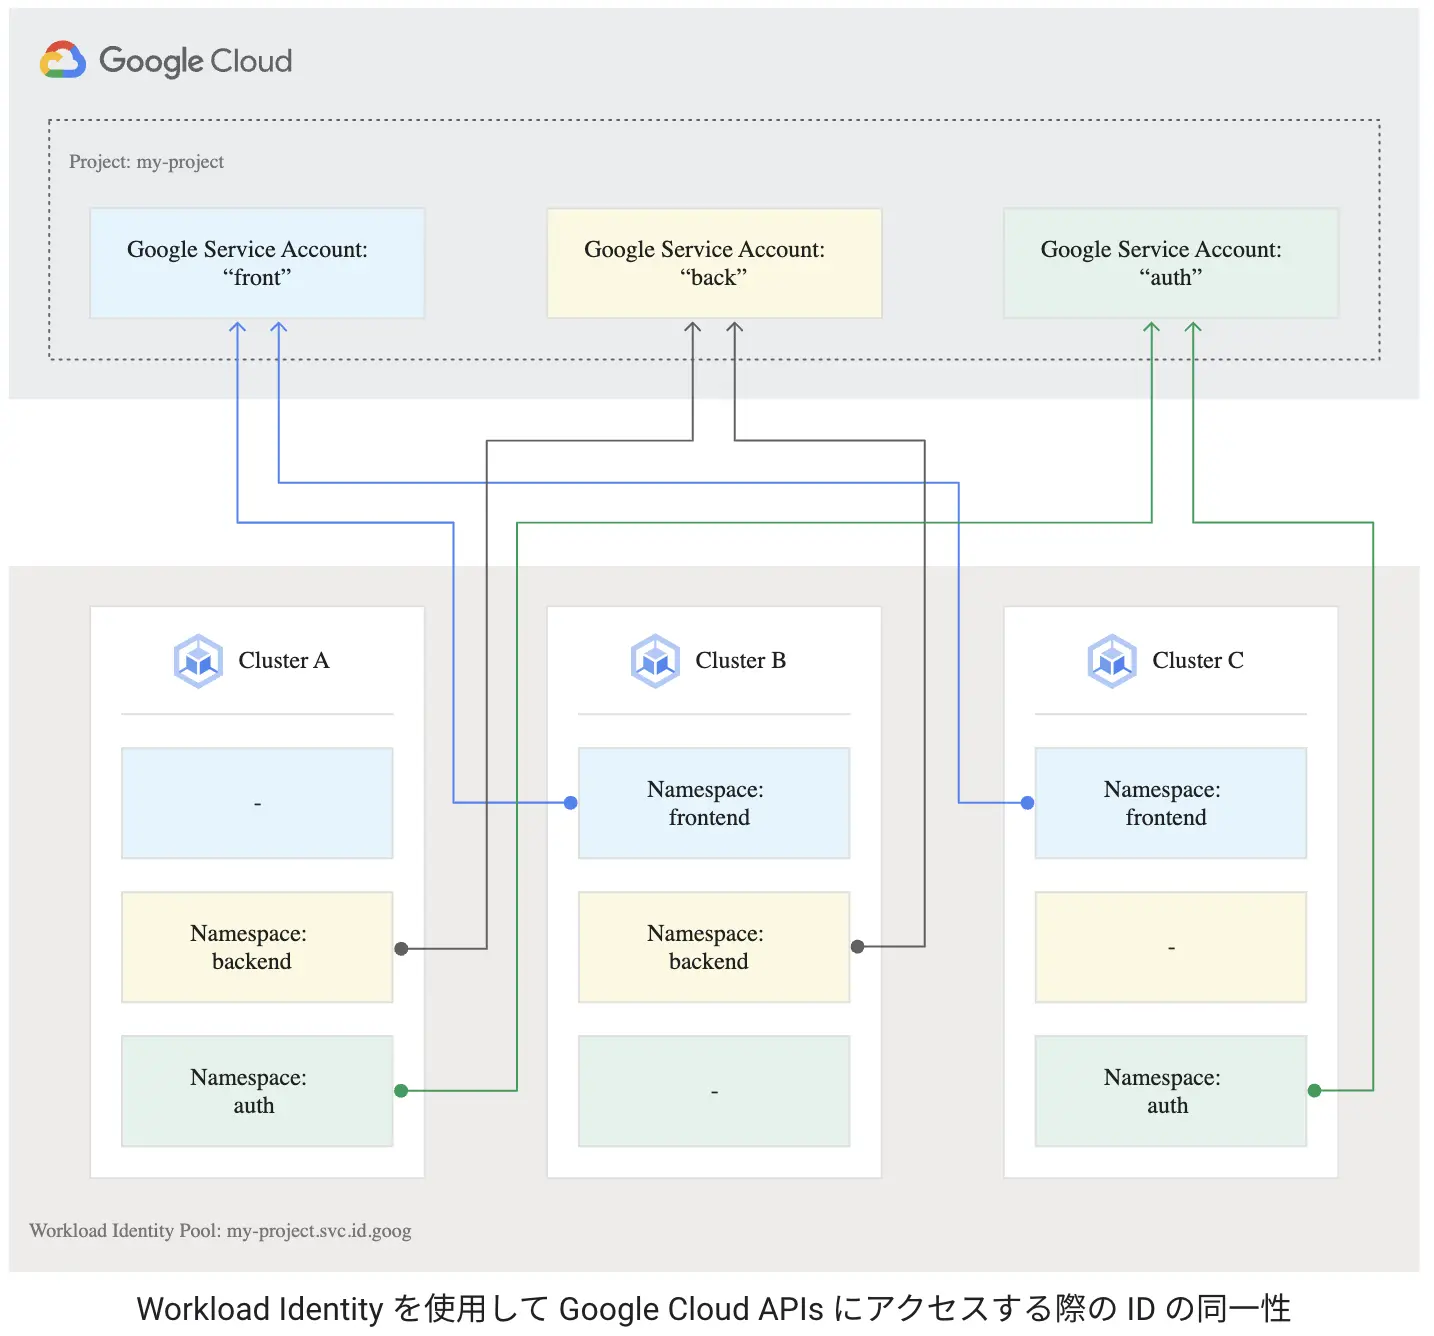 Workload Identity を使用して Google Cloud APIs にアクセスする際の ID の同一性